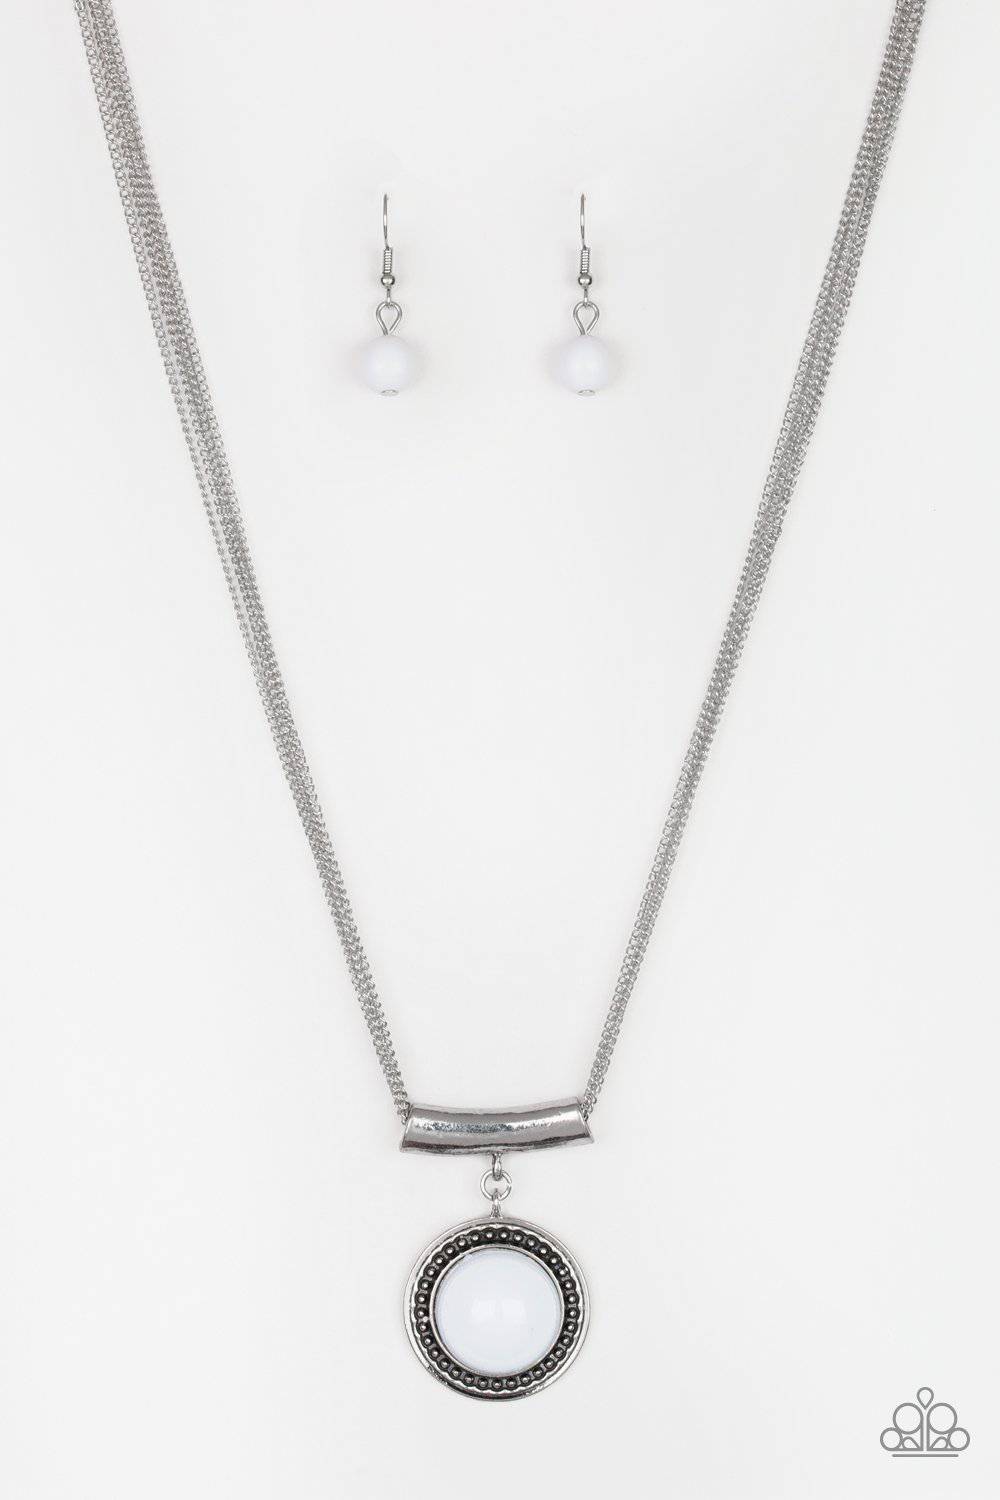 A189 - Gypsy Gulf Necklace by Paparazzi Accessories on Fancy5Fashion.com